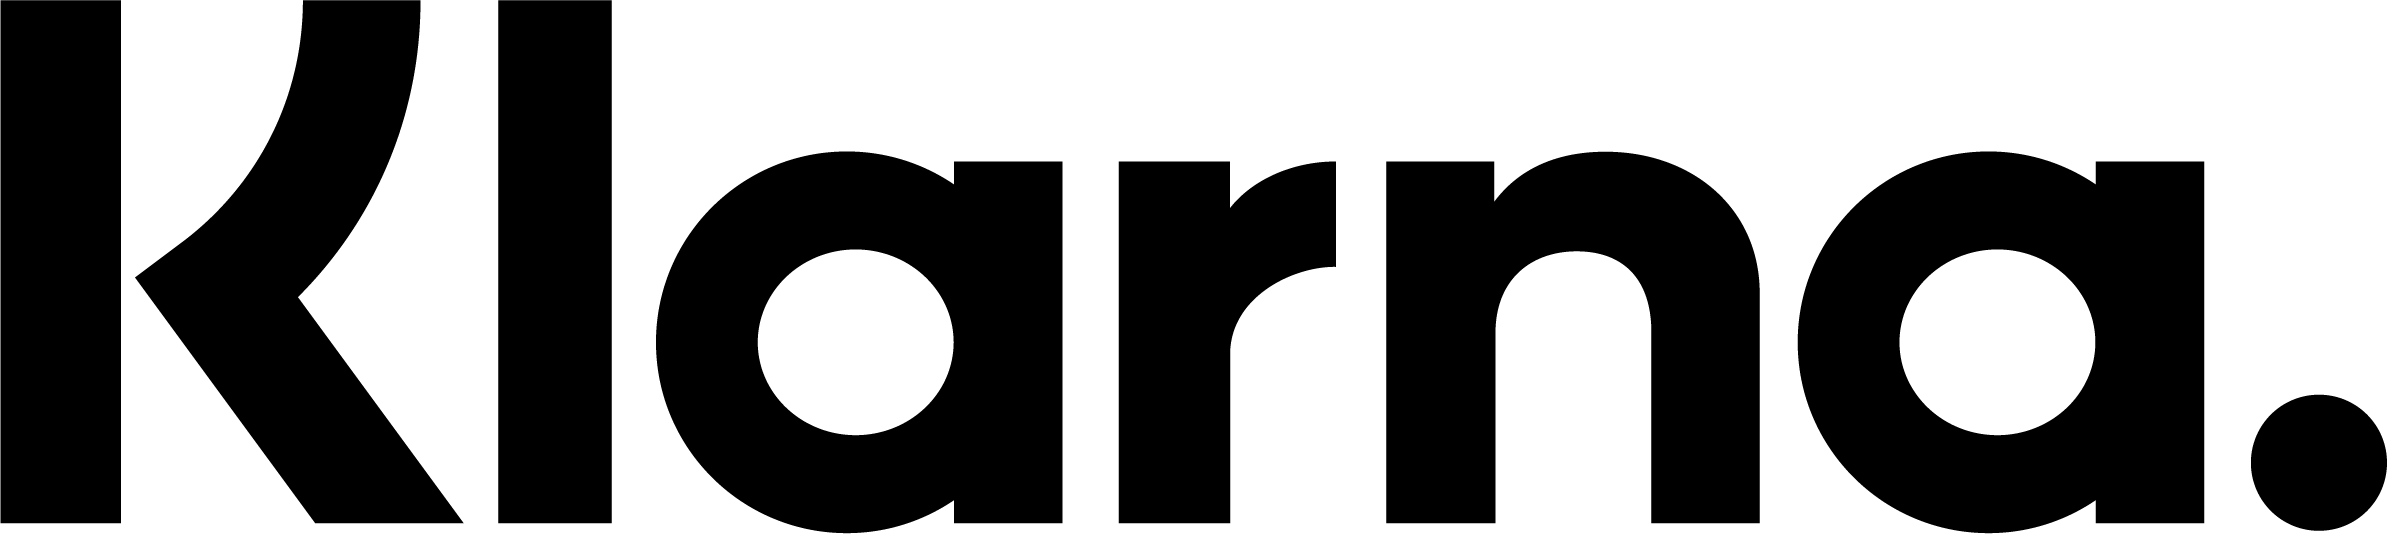 Логотип Klarna